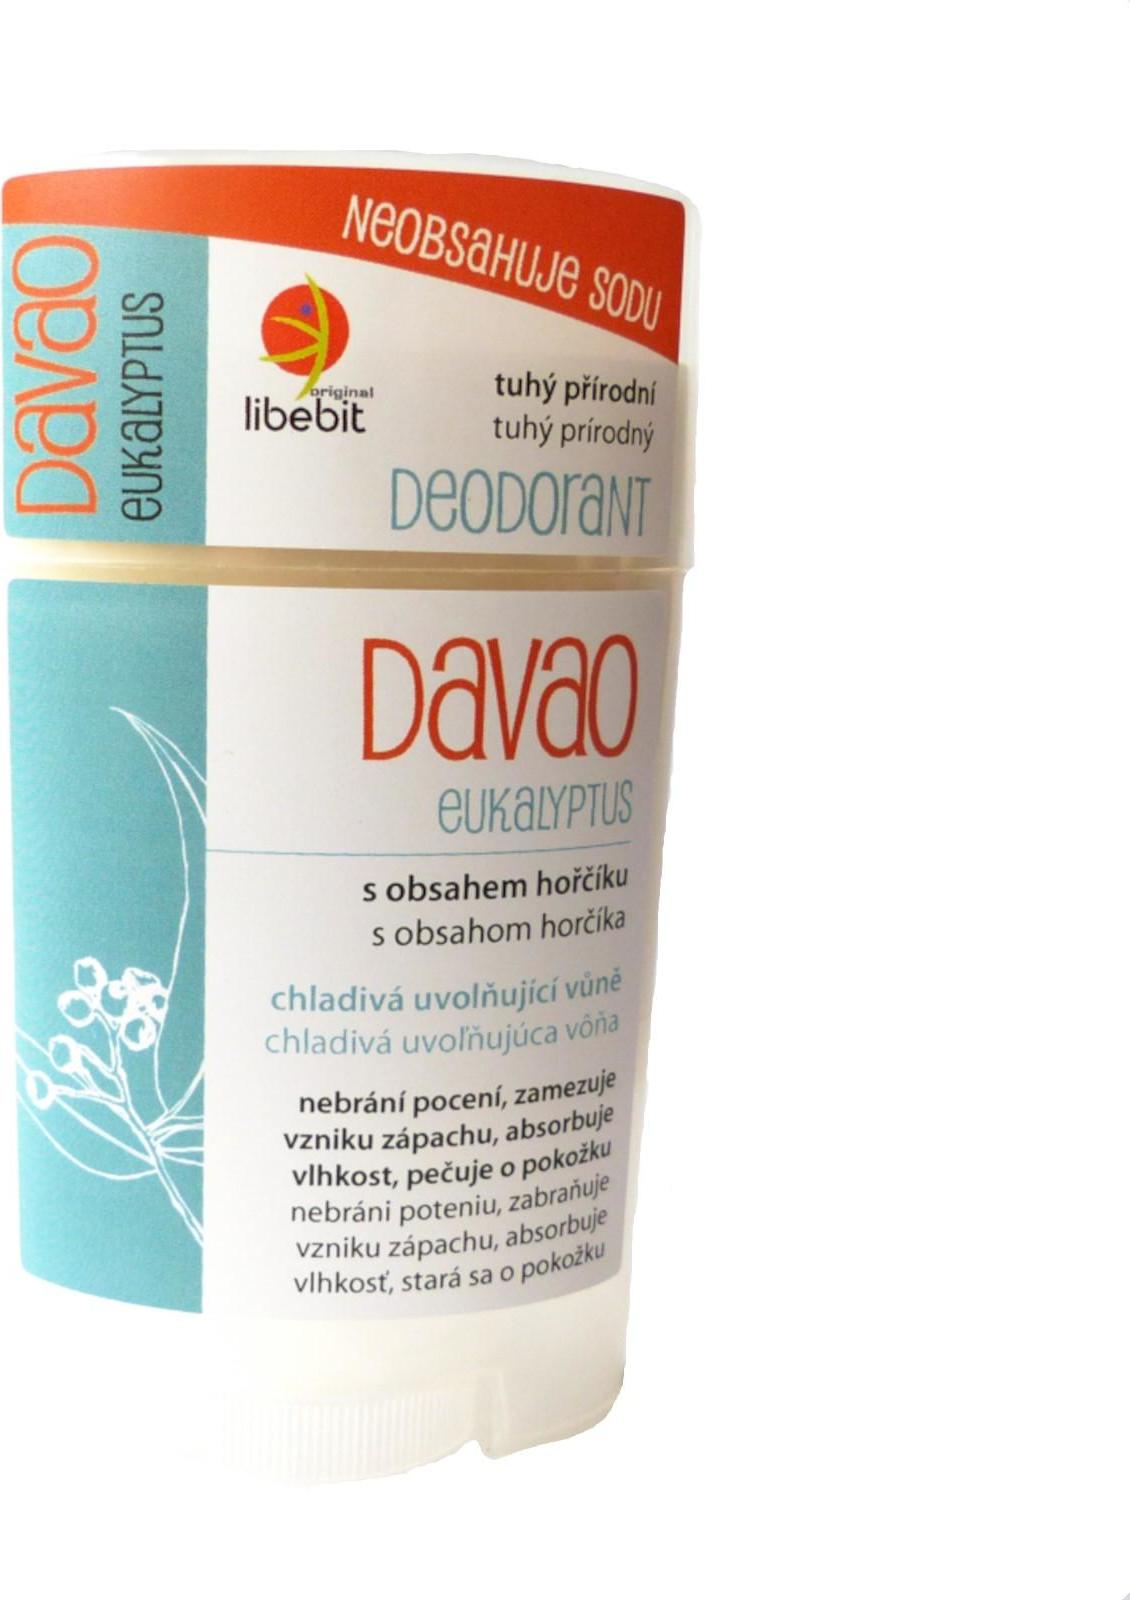 Libebit Tuhý přírodní deodorant DAVAO klasik 65 g